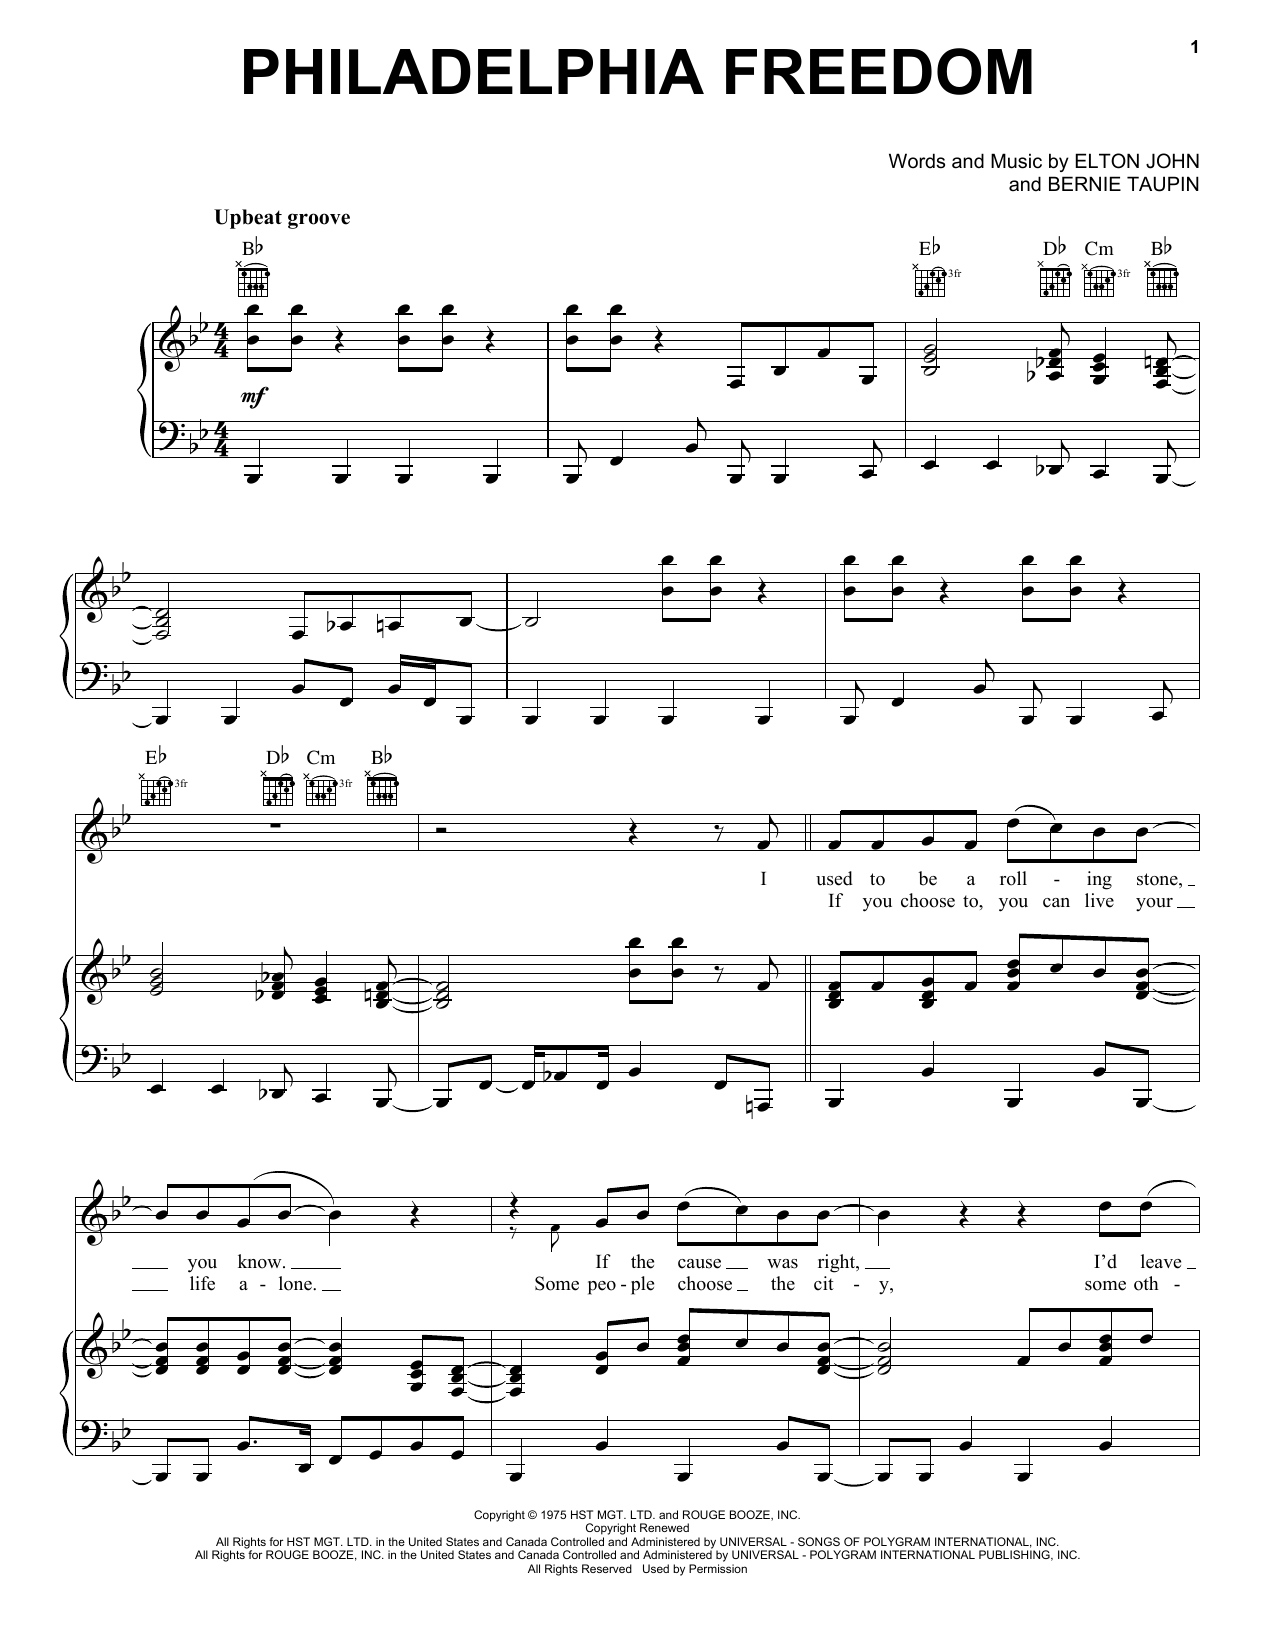 Elton John Philadelphia Freedom Sheet Music Notes & Chords for Piano (Big Notes) - Download or Print PDF